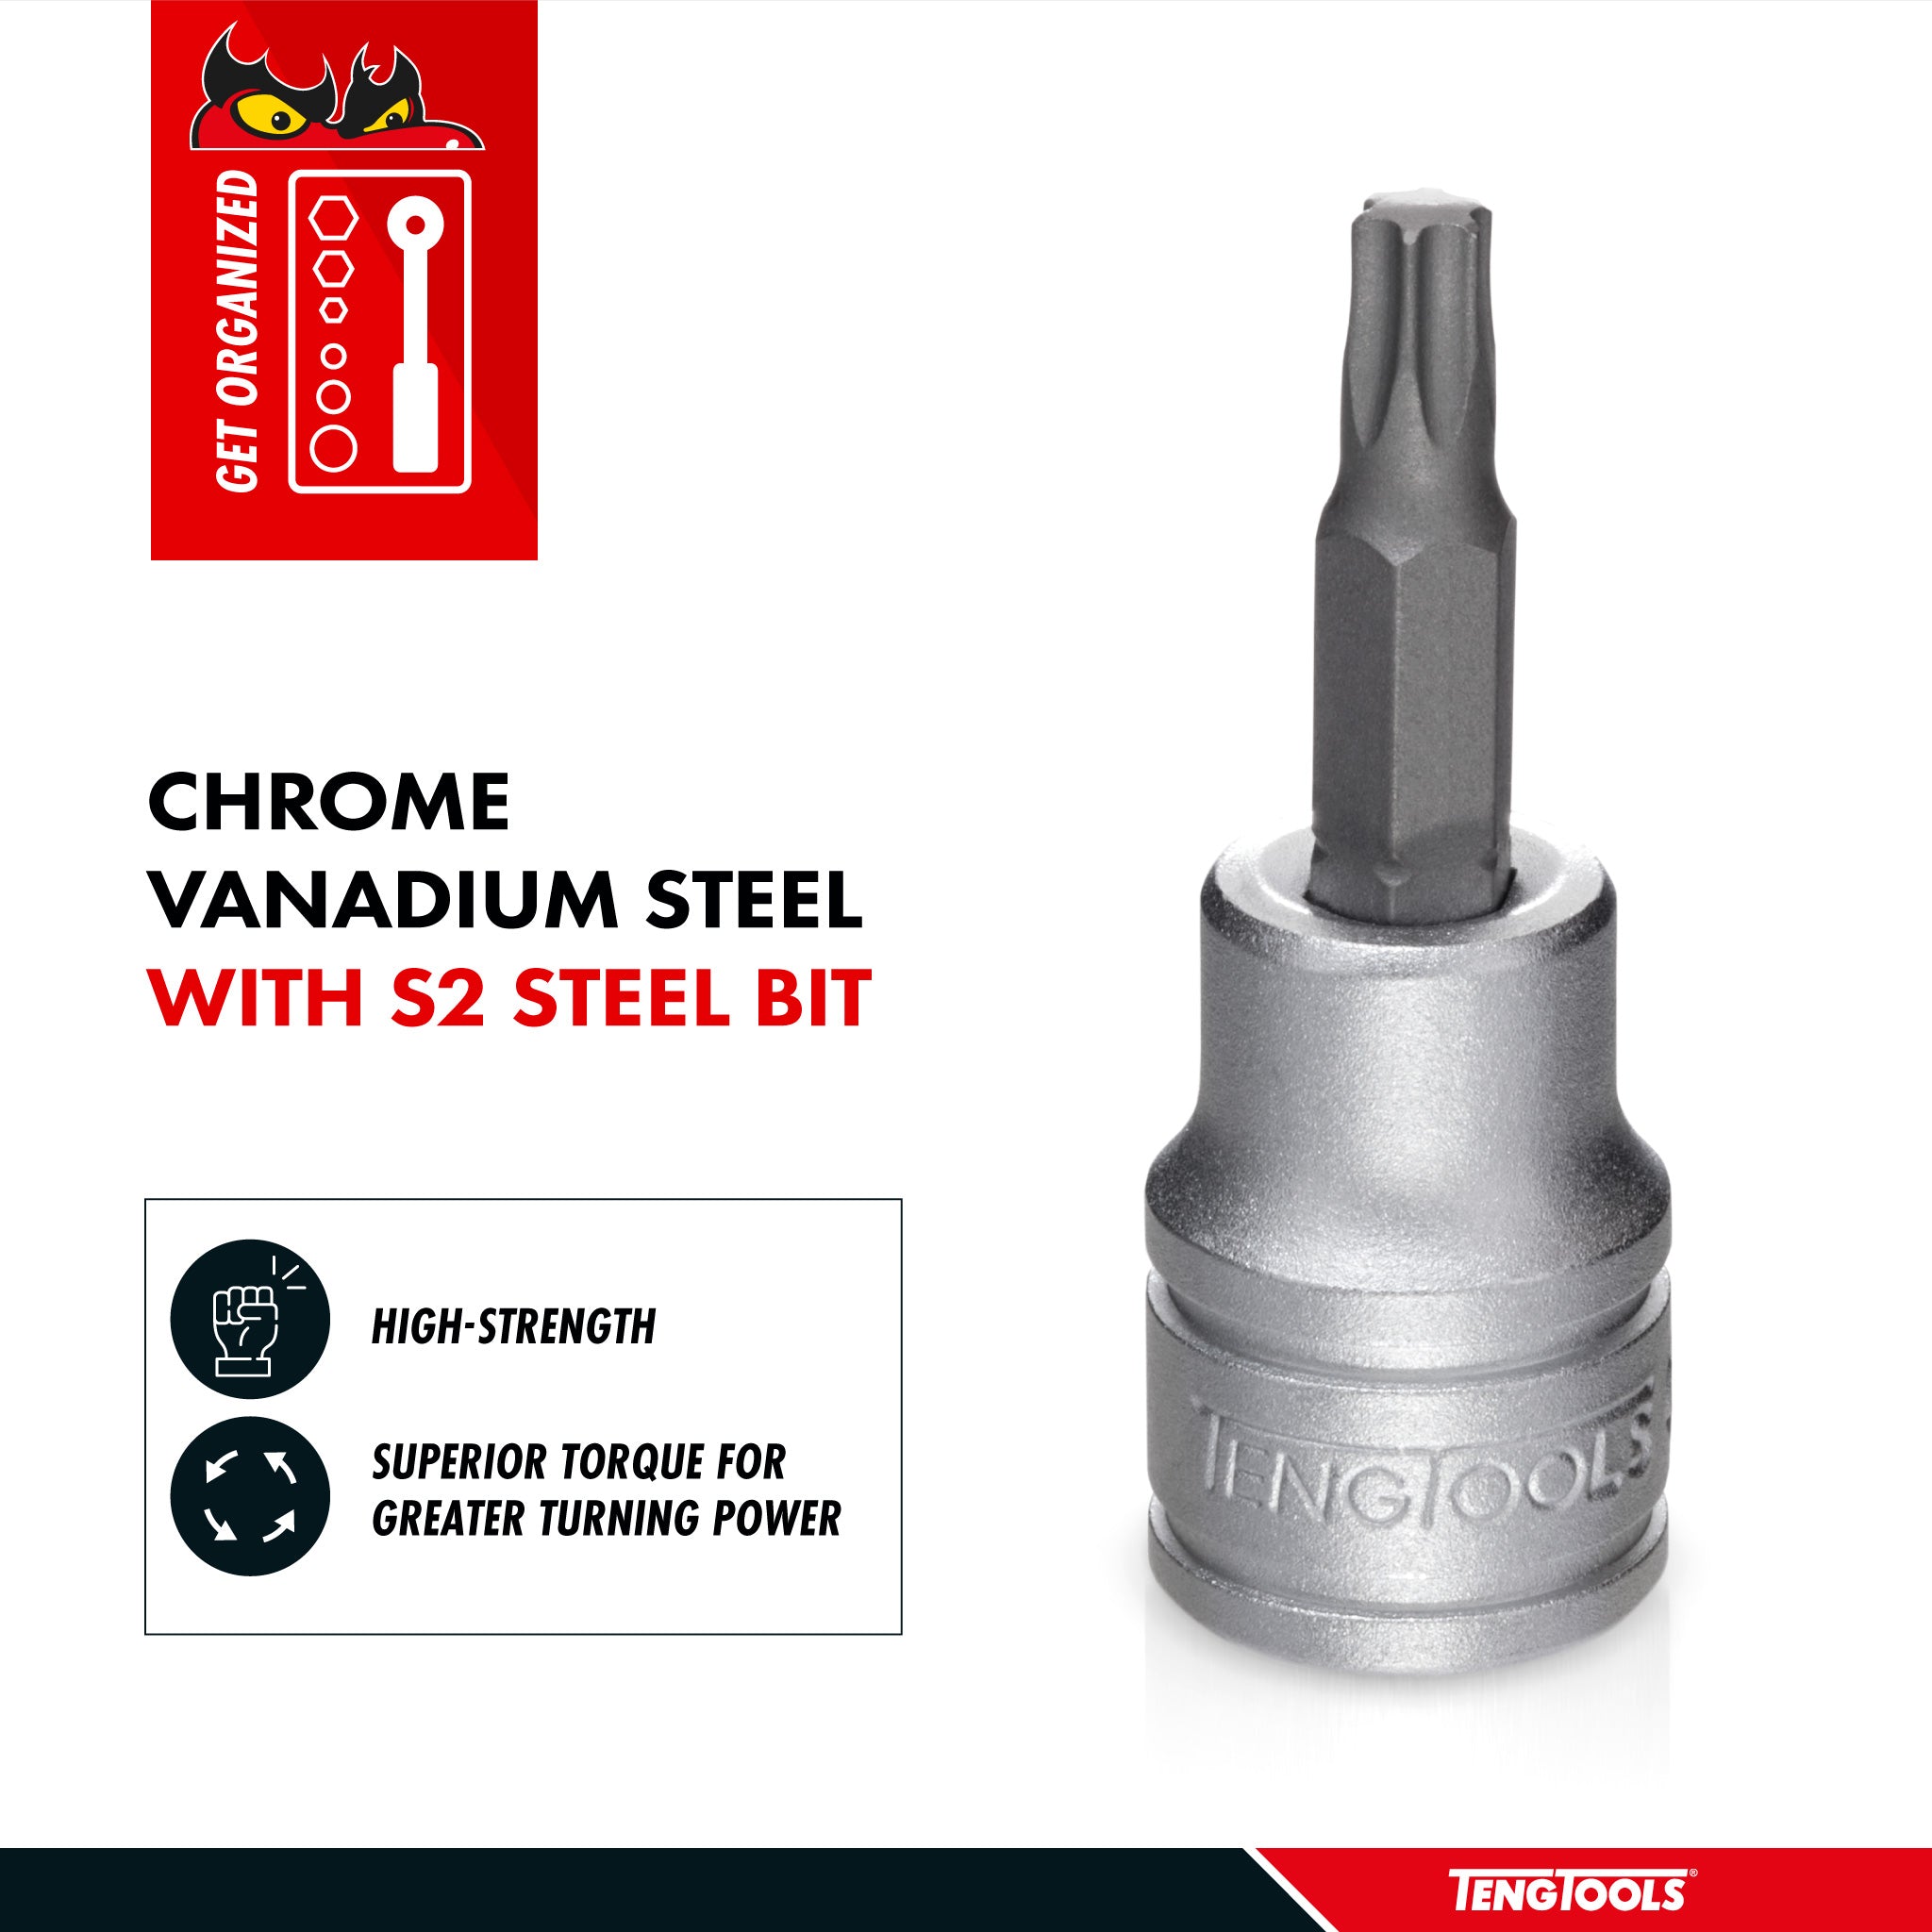 Teng Tools 3/8 Inch Drive Metric Torx TX Chrome Vanadium Sockets - TX45